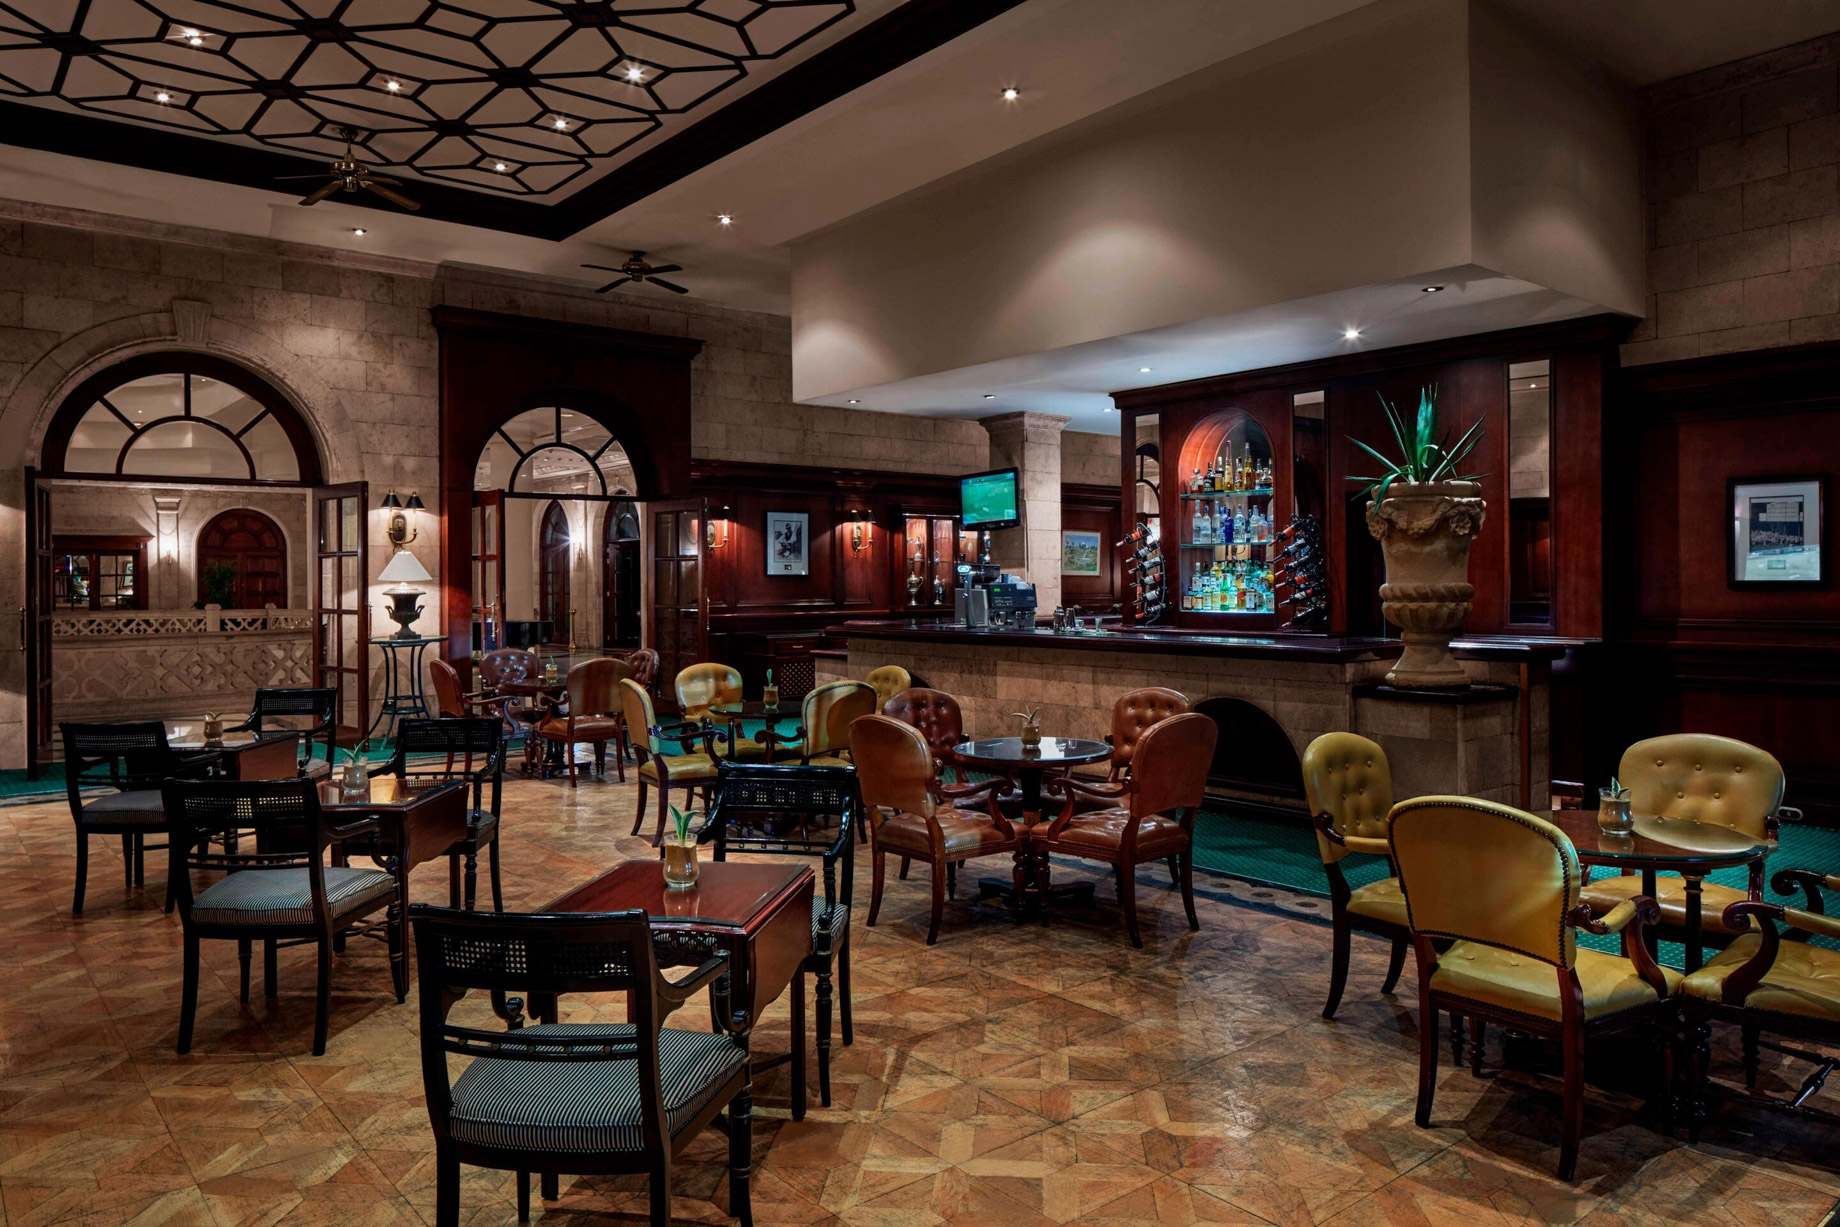 JW Marriott Hotel Cairo - Cairo, Egypt - Cactus Bar Interior